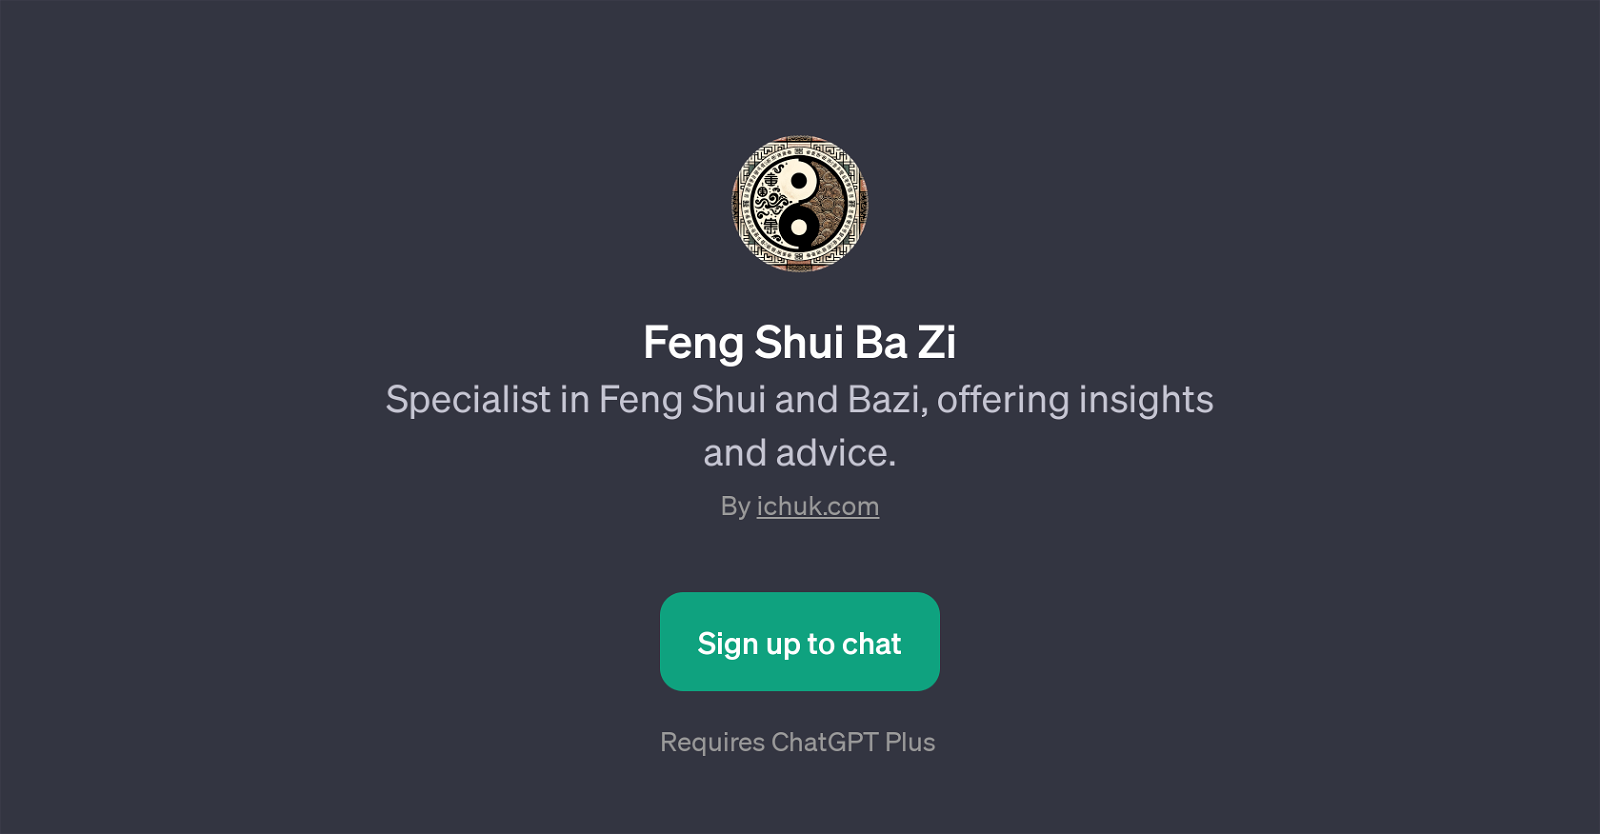 Feng Shui Ba Zi website